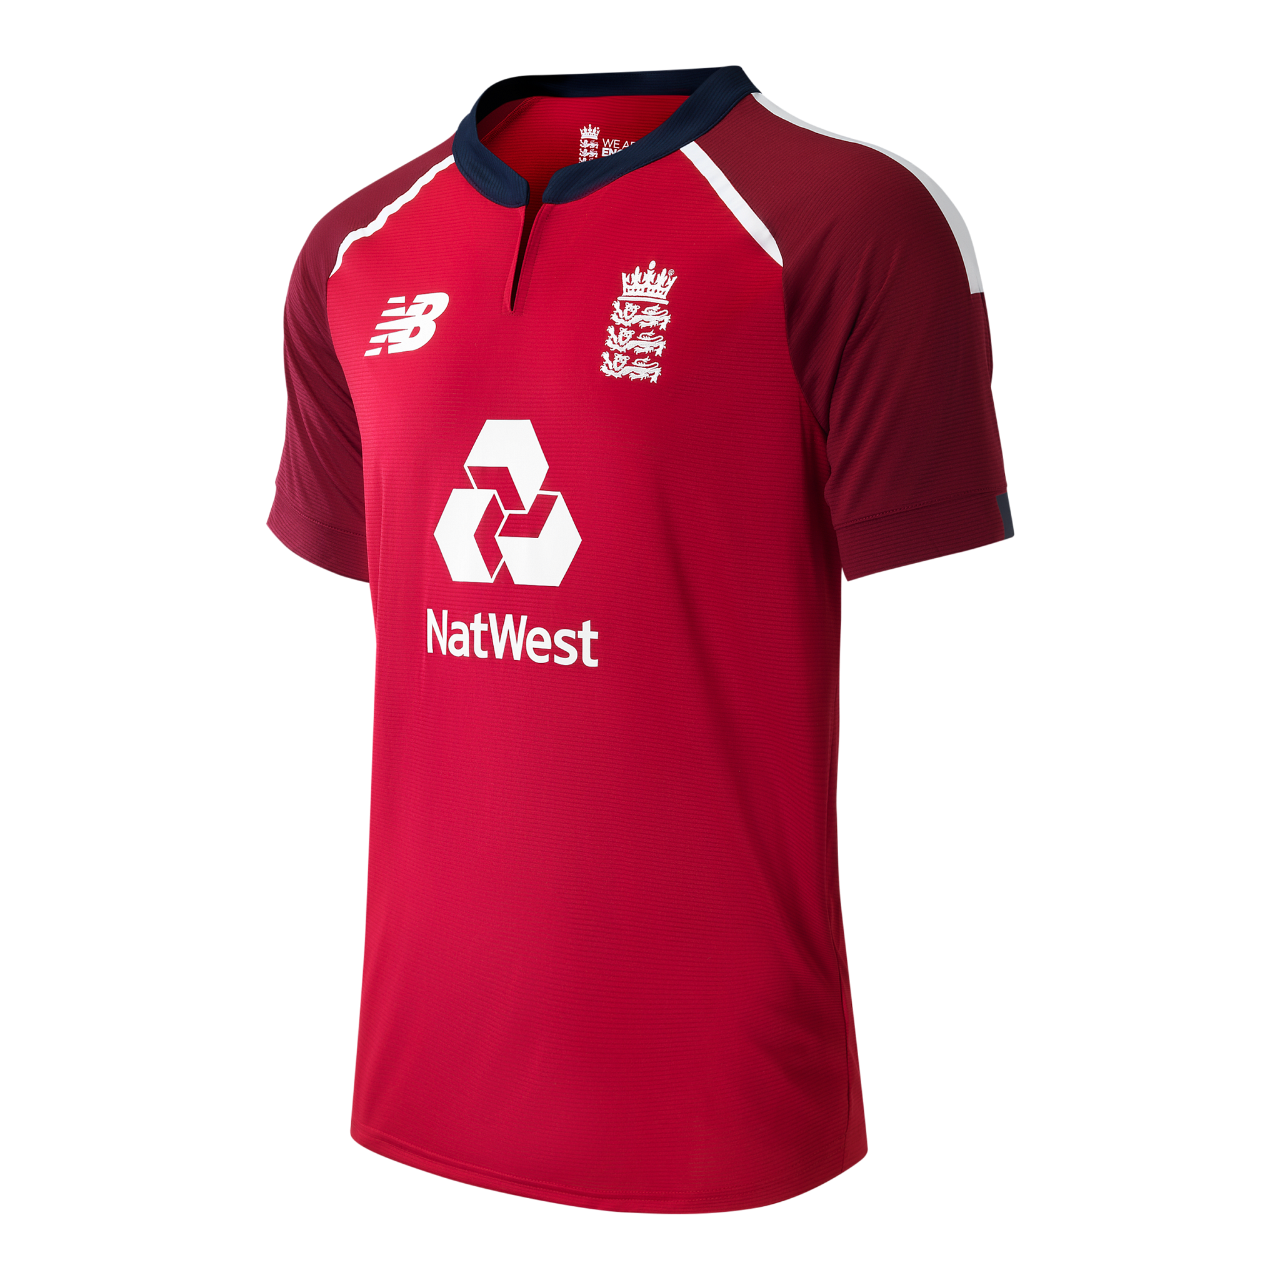 england test cricket shirt 2020